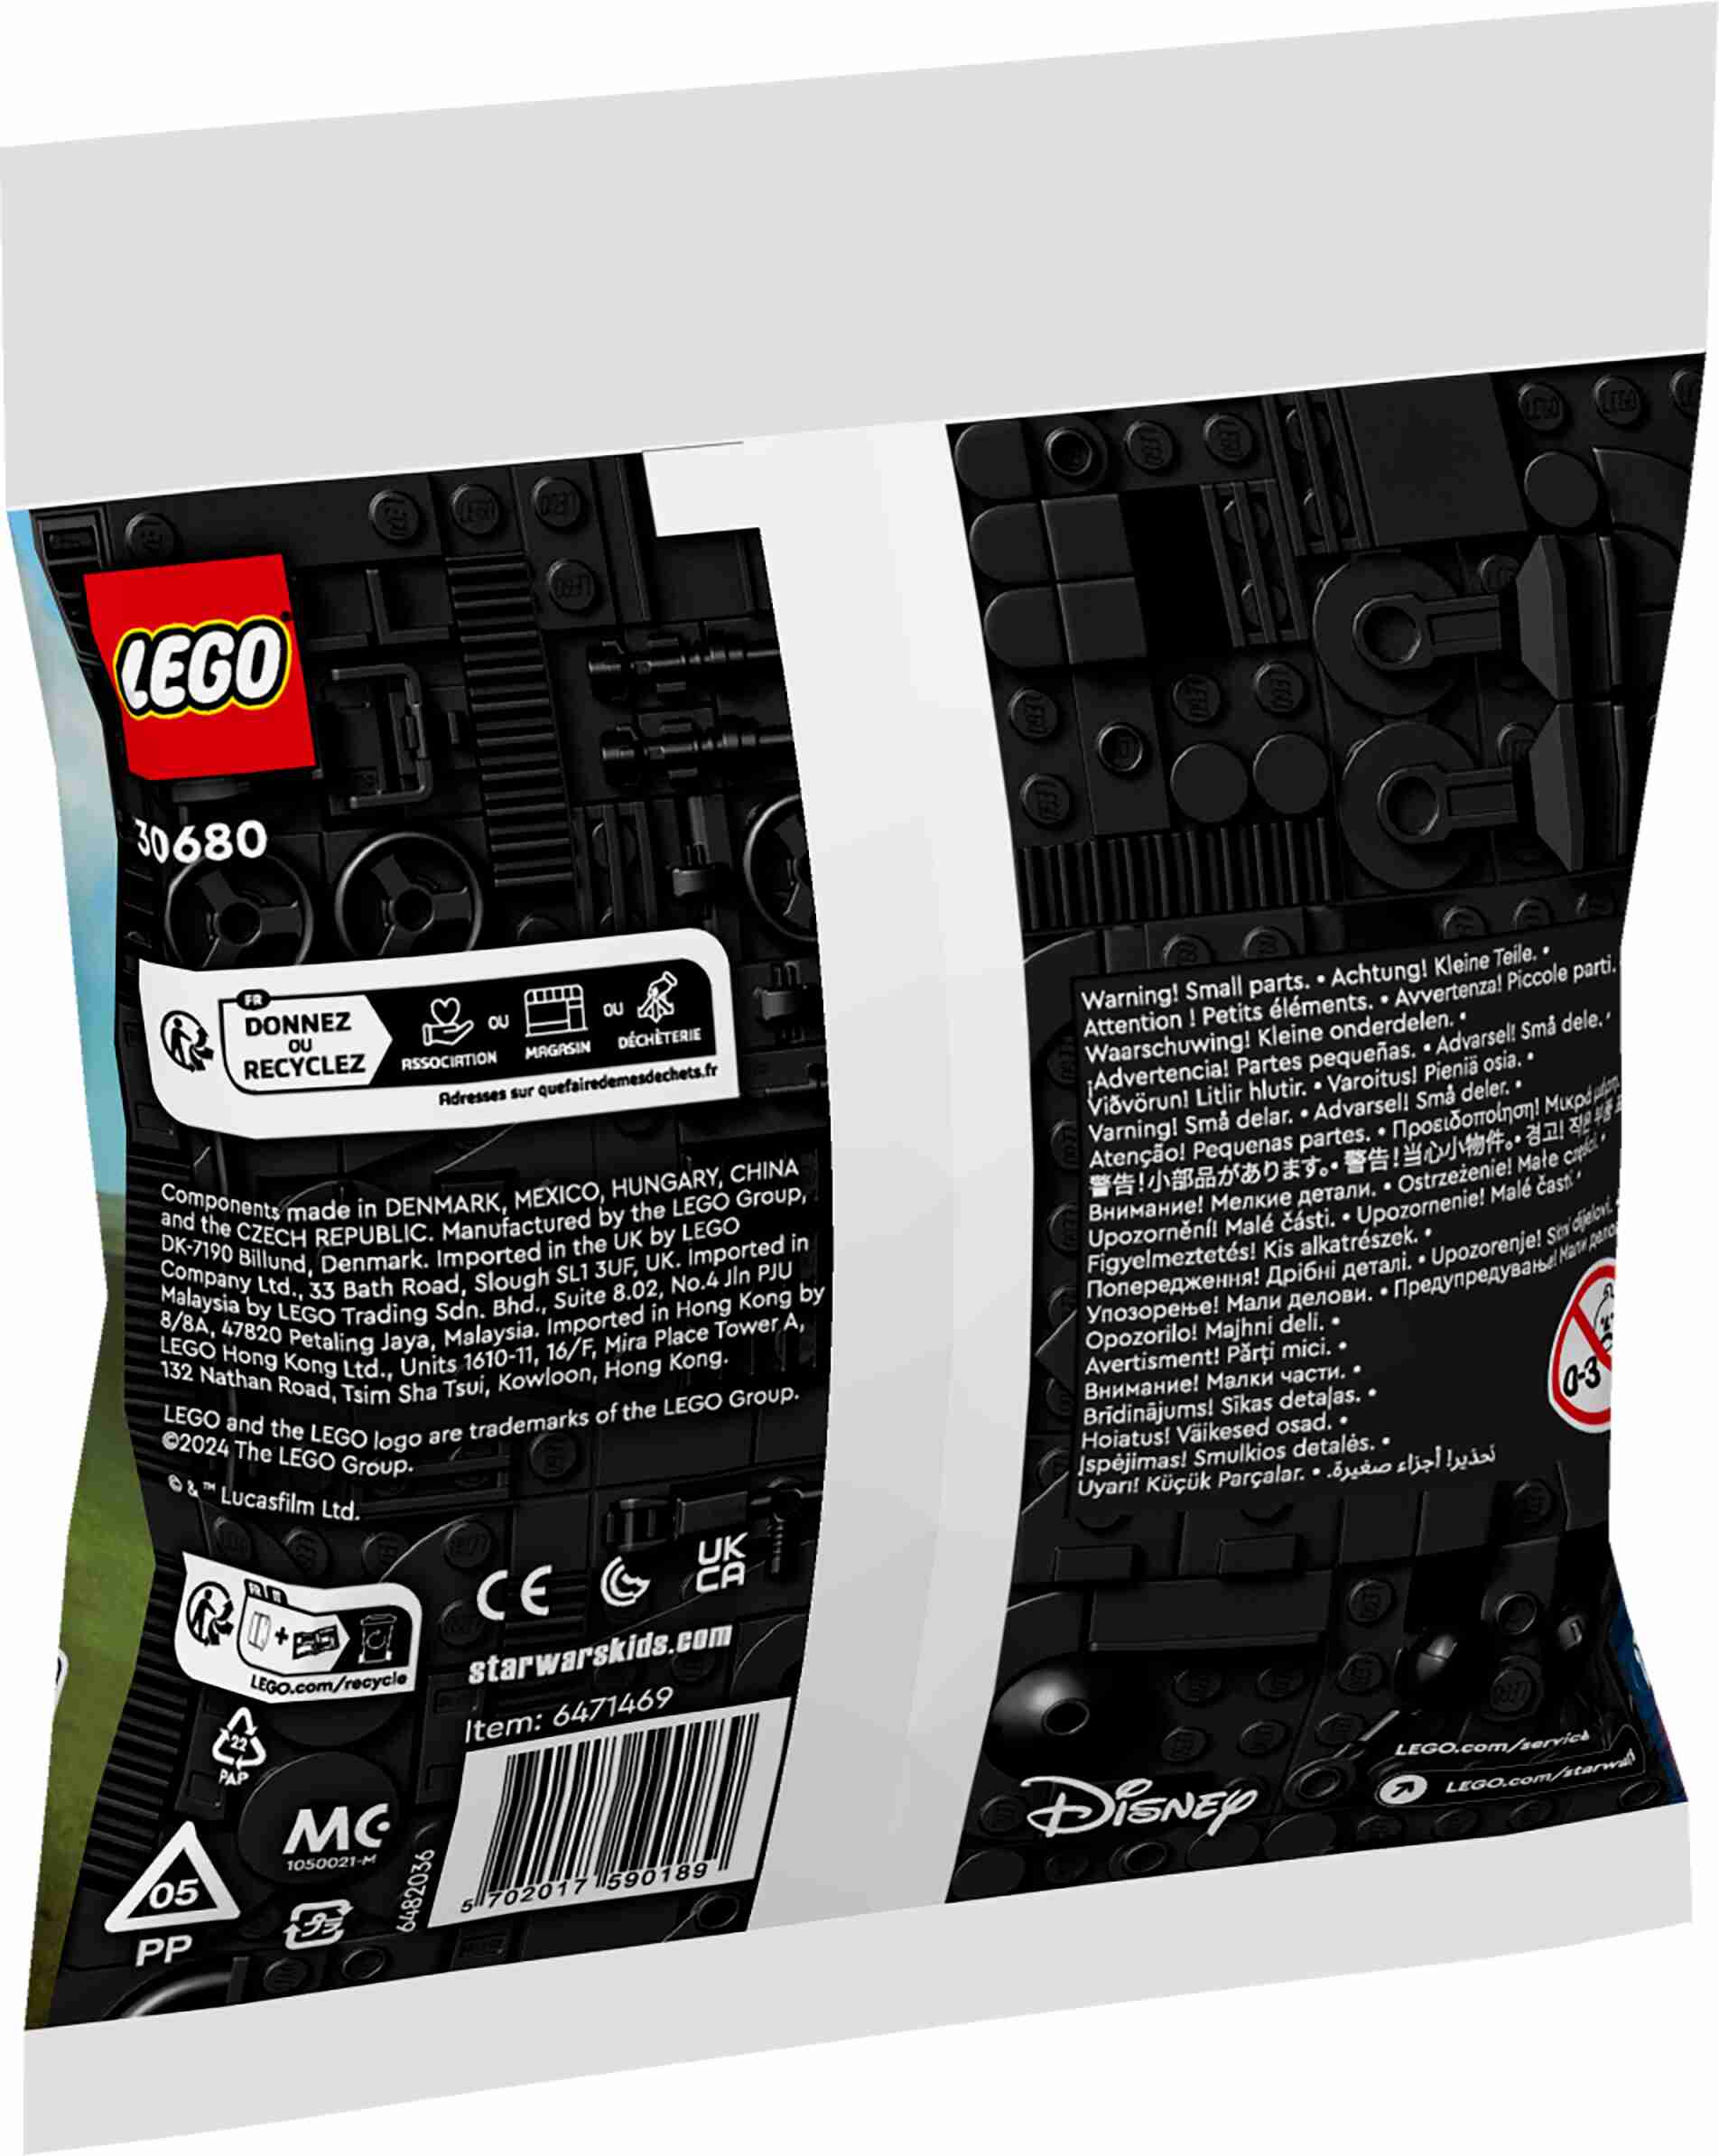 LEGO 30680 Star Wars AAT